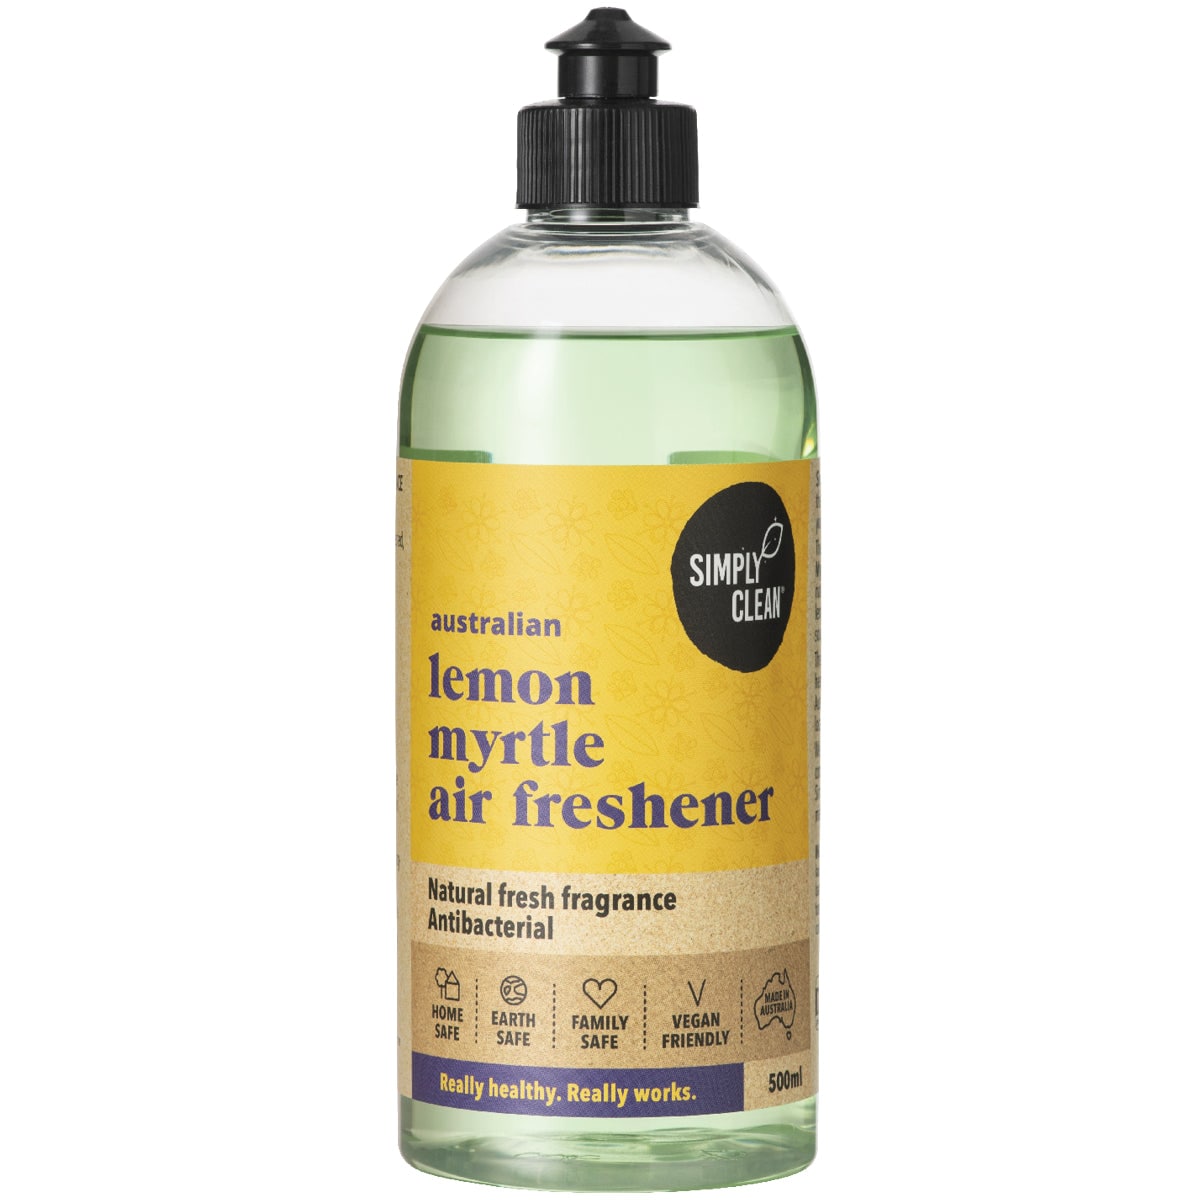 Simply Clean Lemon Myrtle Air Freshener Refill 500ml